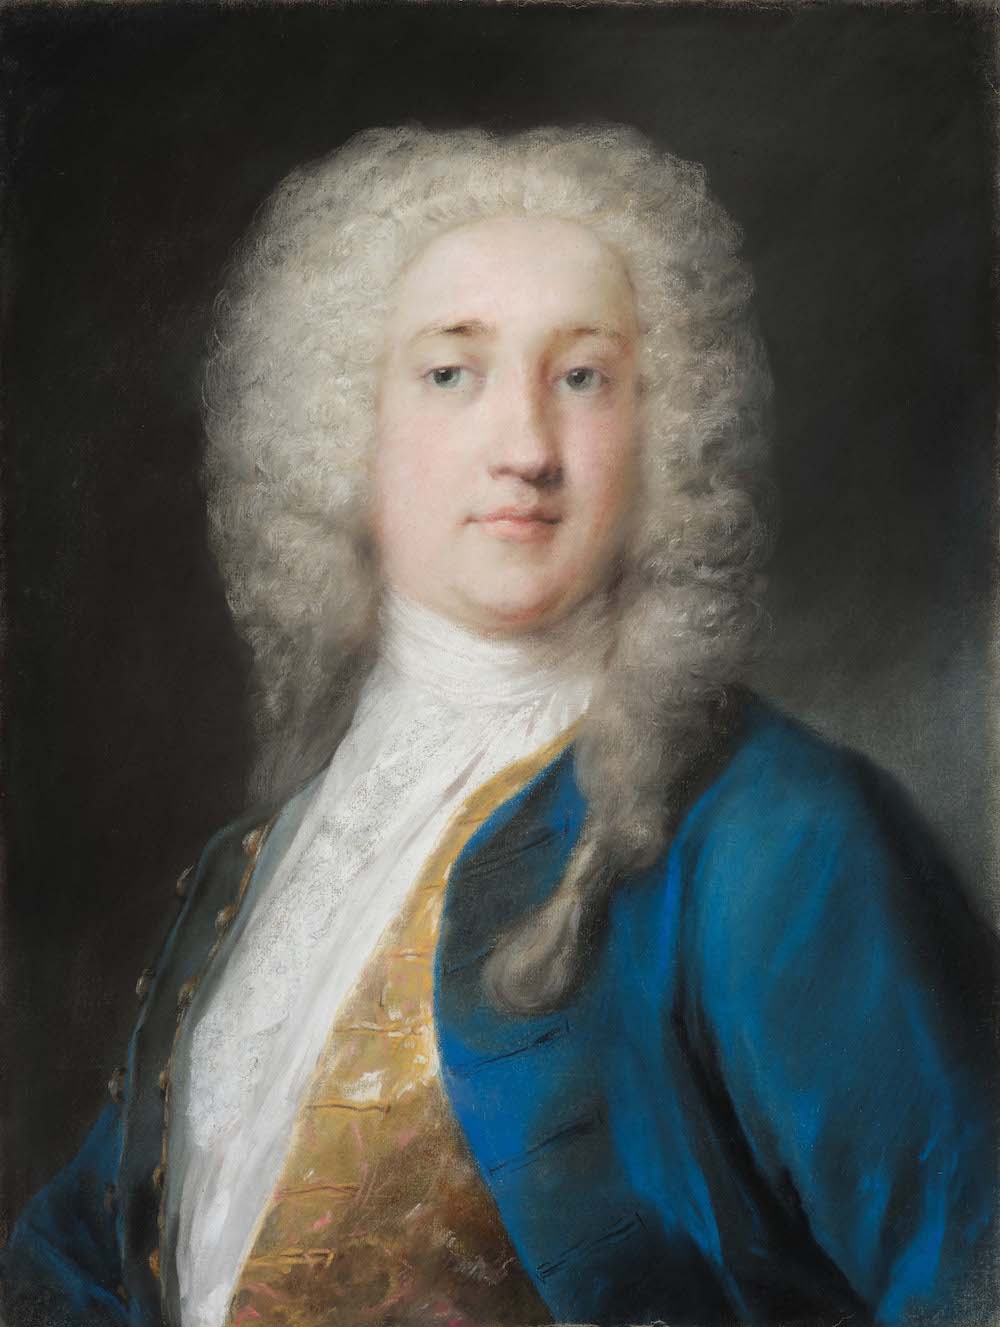 Rosalba CARRIERA, Portrait of a gentleman in blue coat